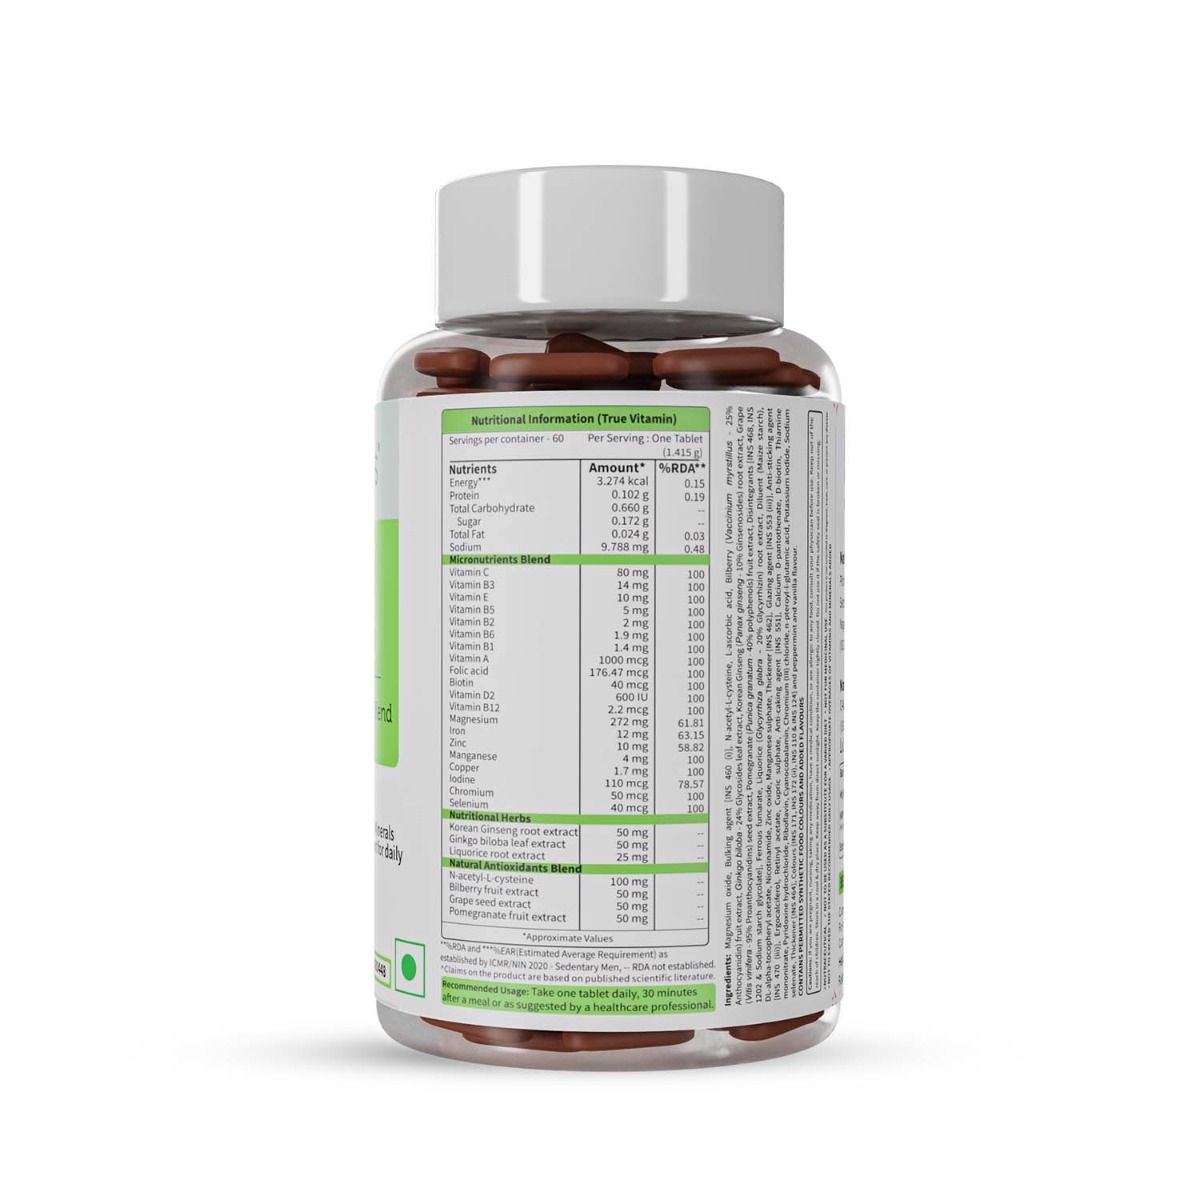 Neuherbs True Vitamins with Antioxidants Blend, 60 Tablets, Pack of 1 